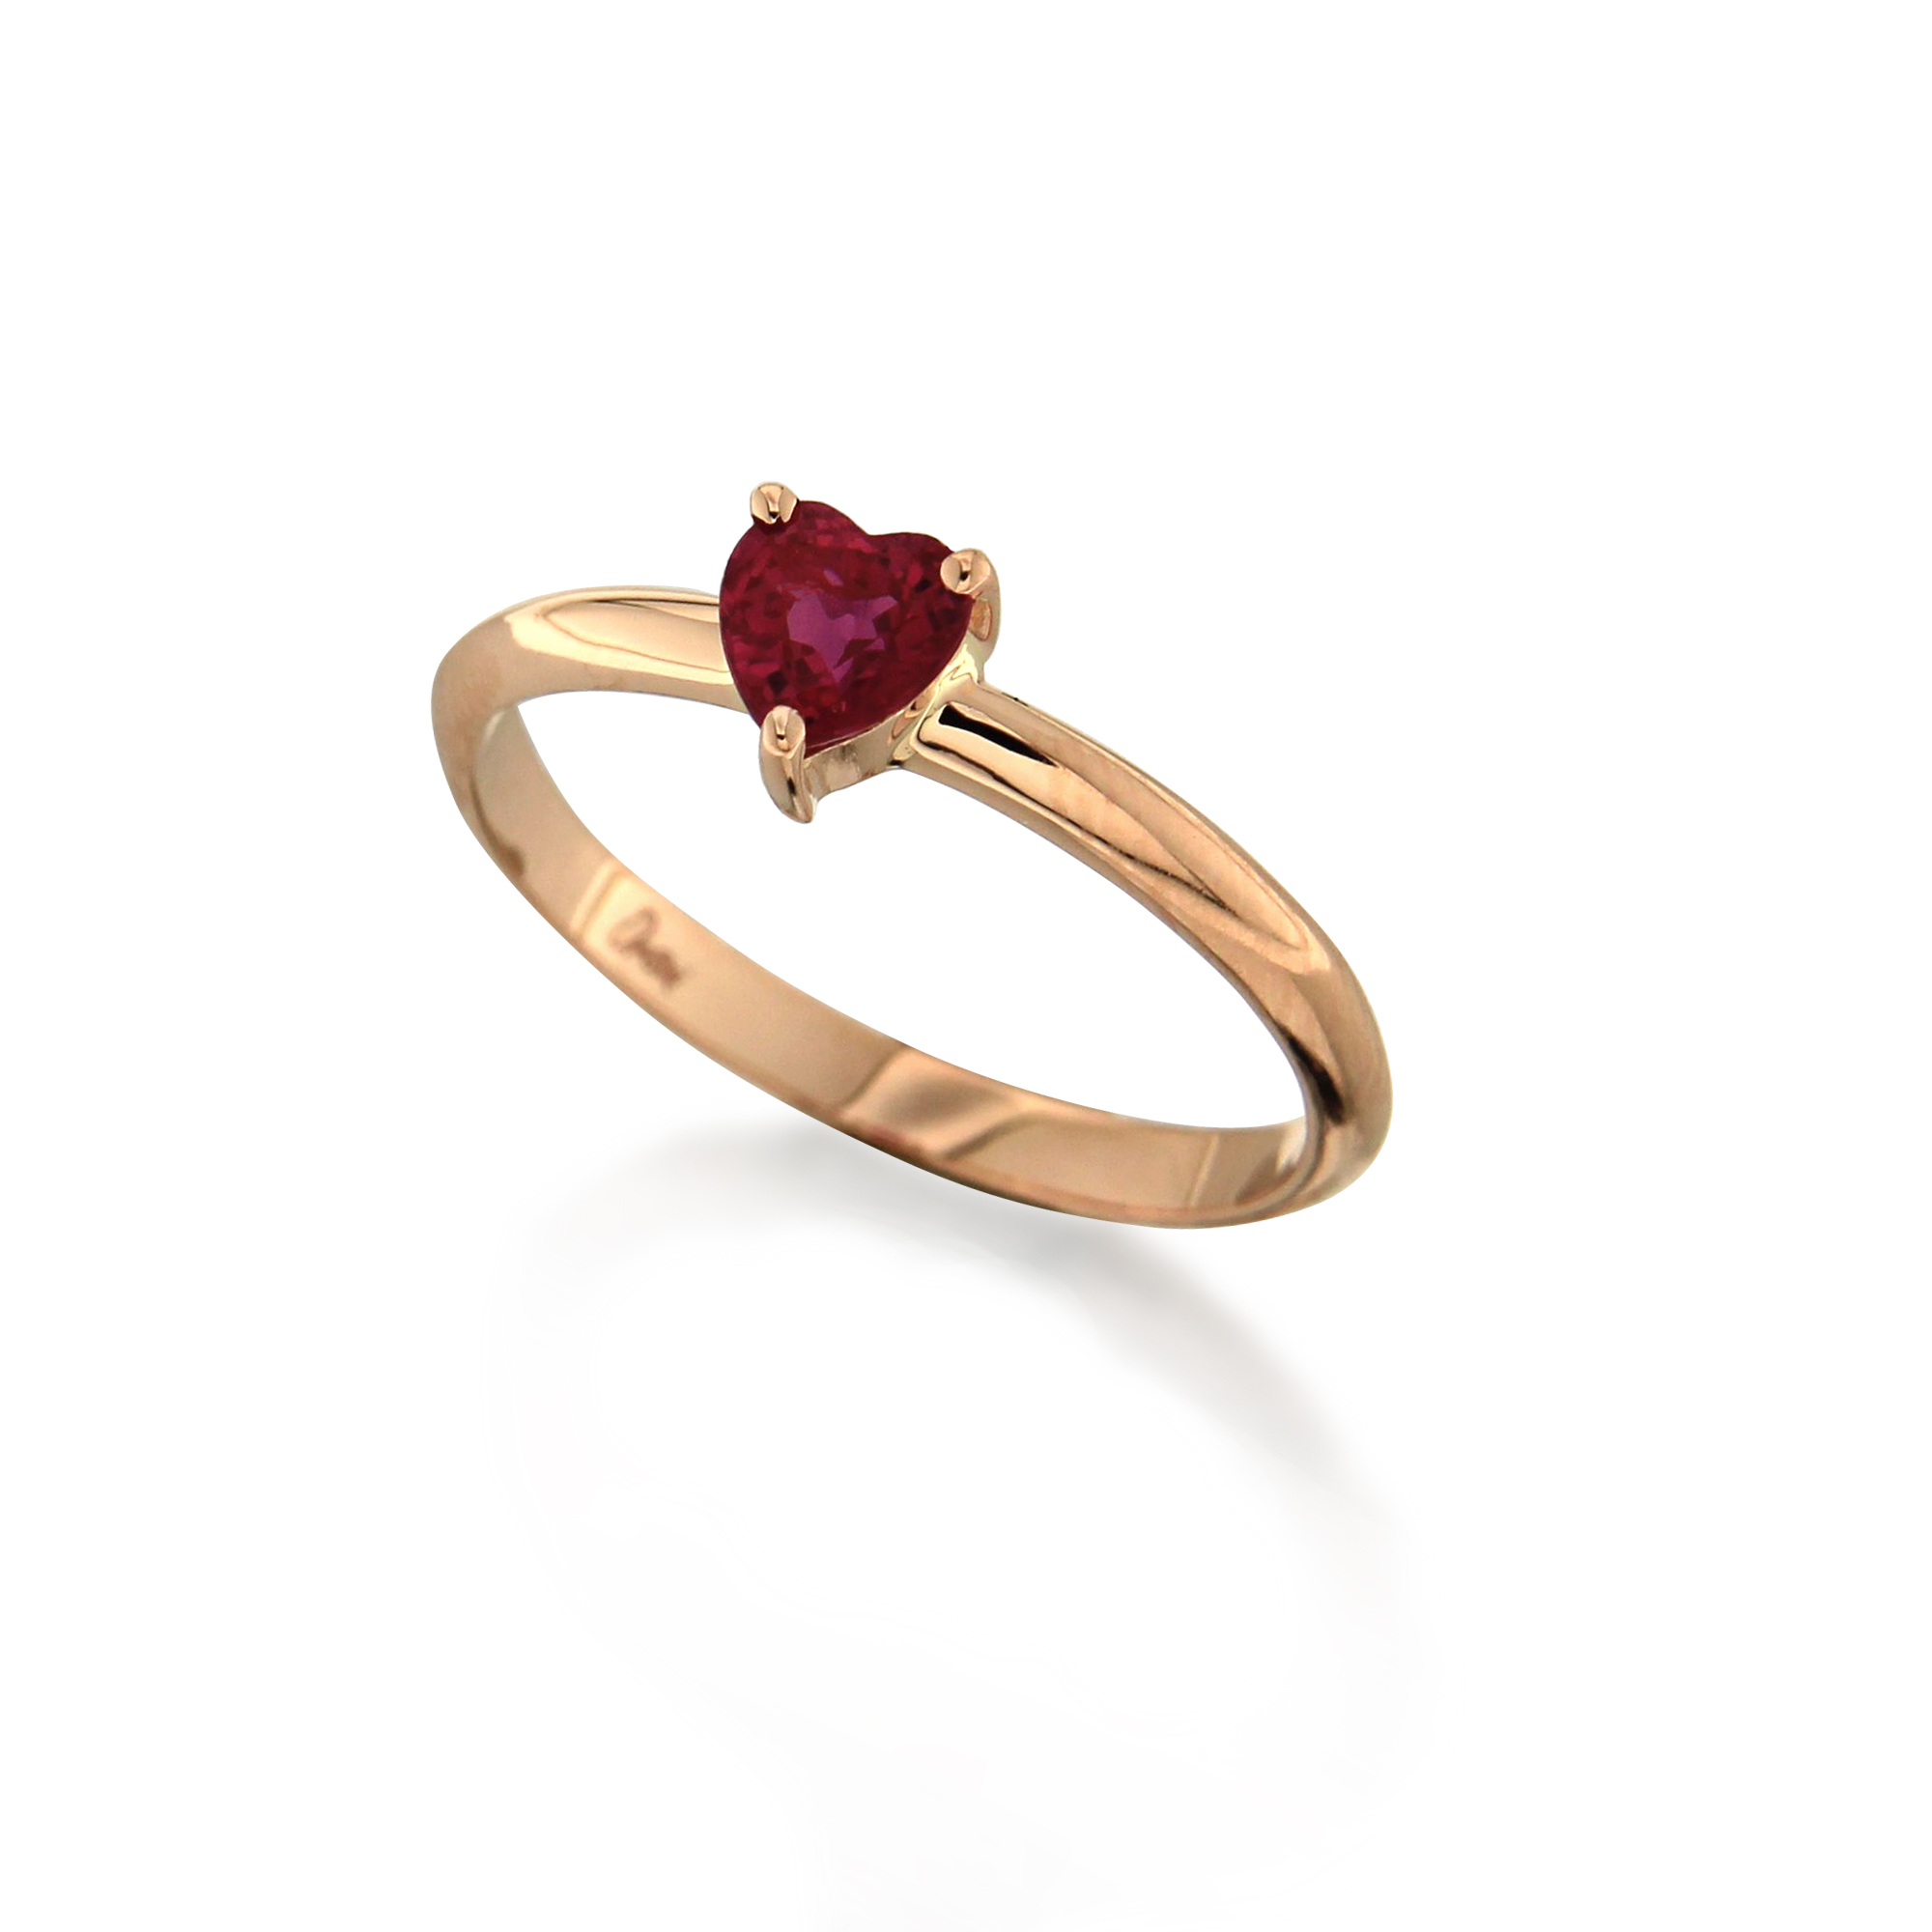 Inel din aur 18K cu rubin forma de inima 0,48 ct., model 2855G-R